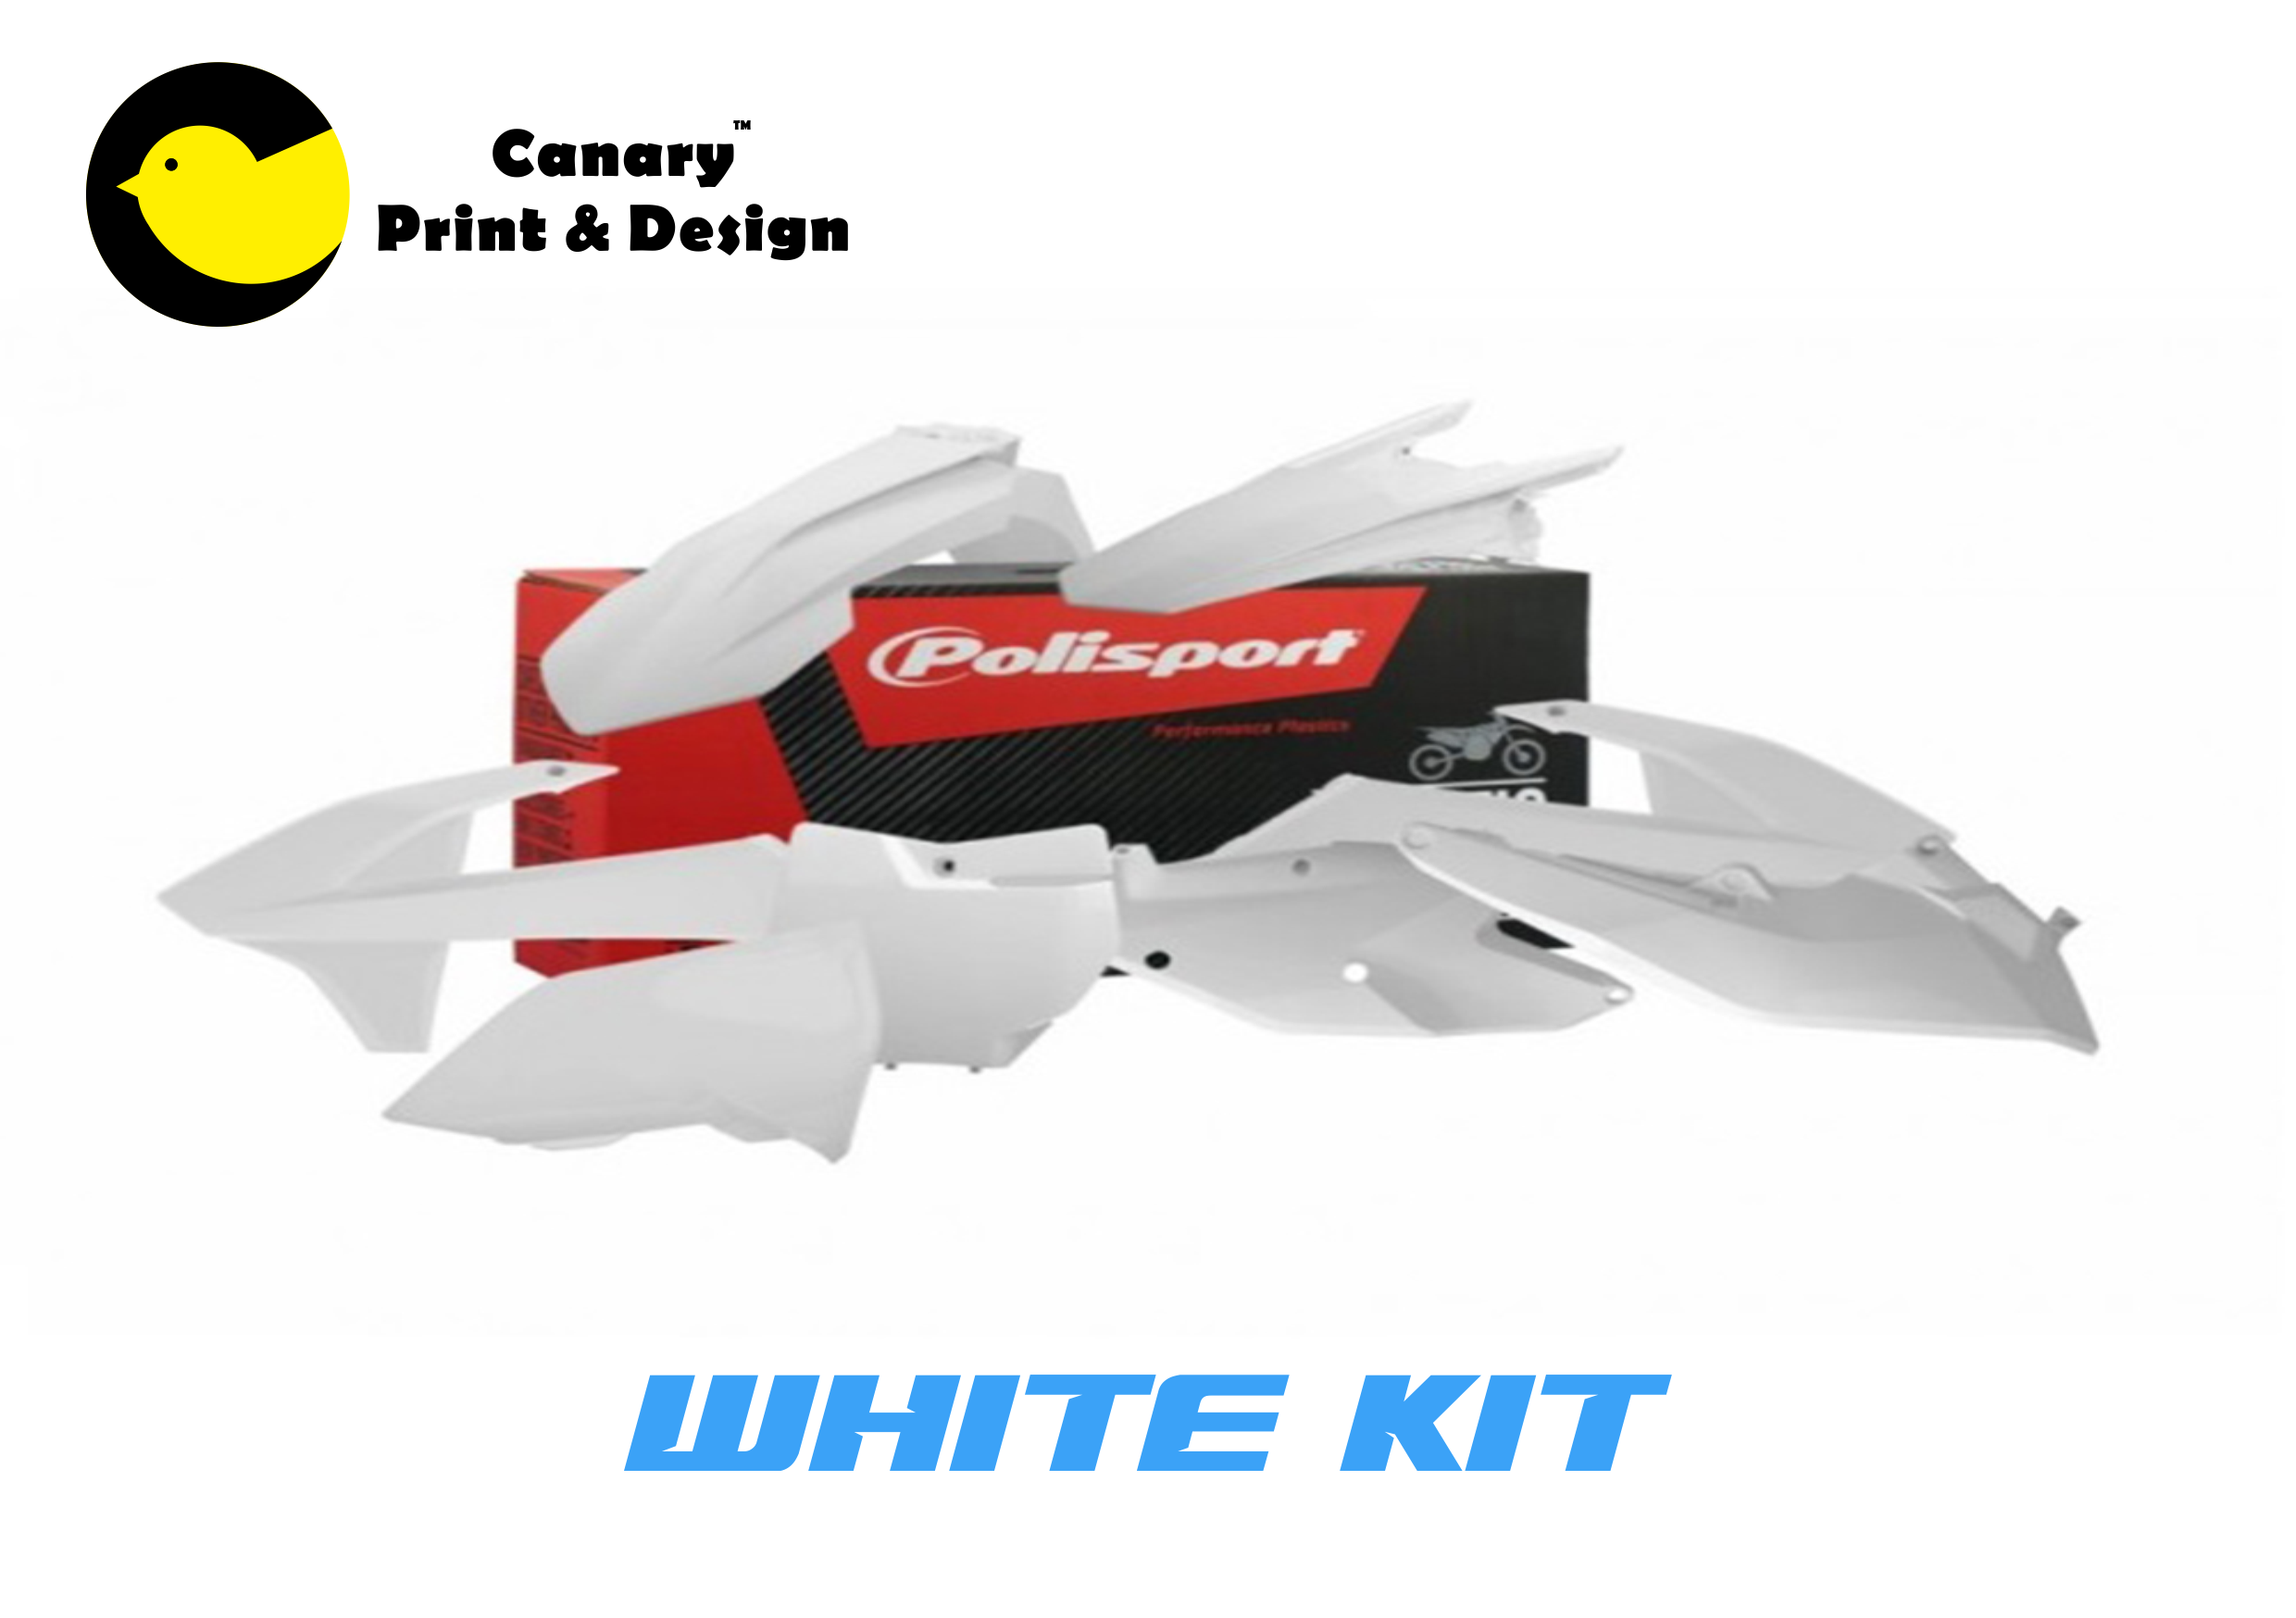 White Kit